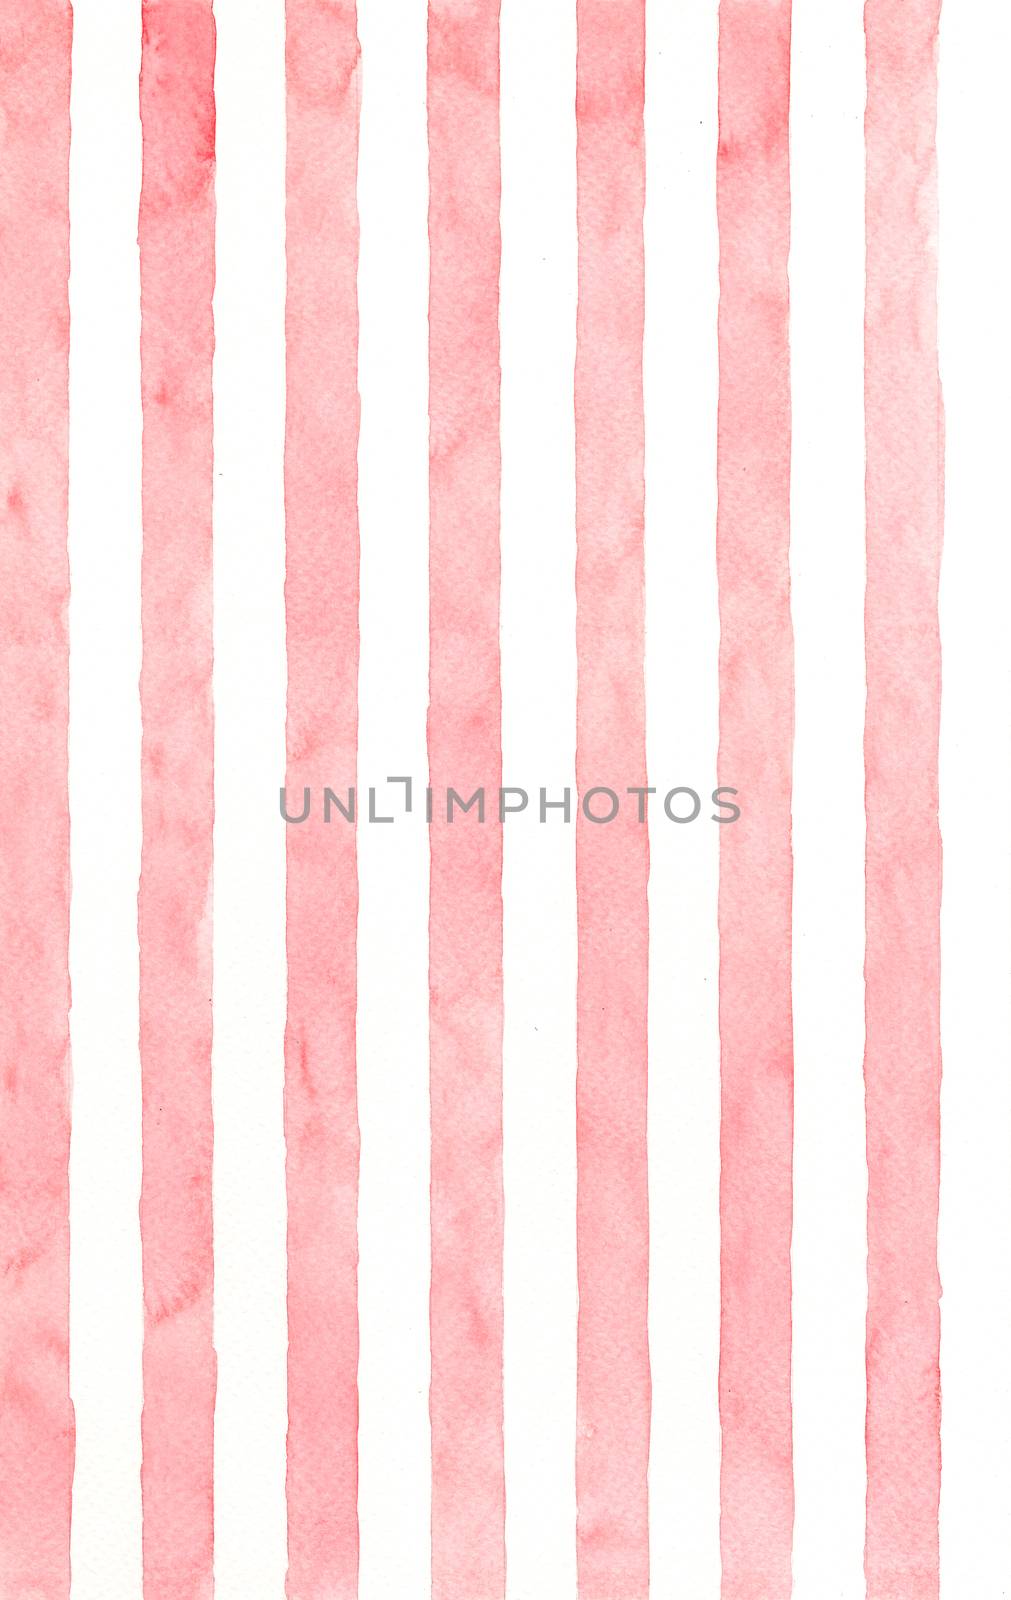 Pink vertical stripes. Handmade watercolor.Seamless pattern.